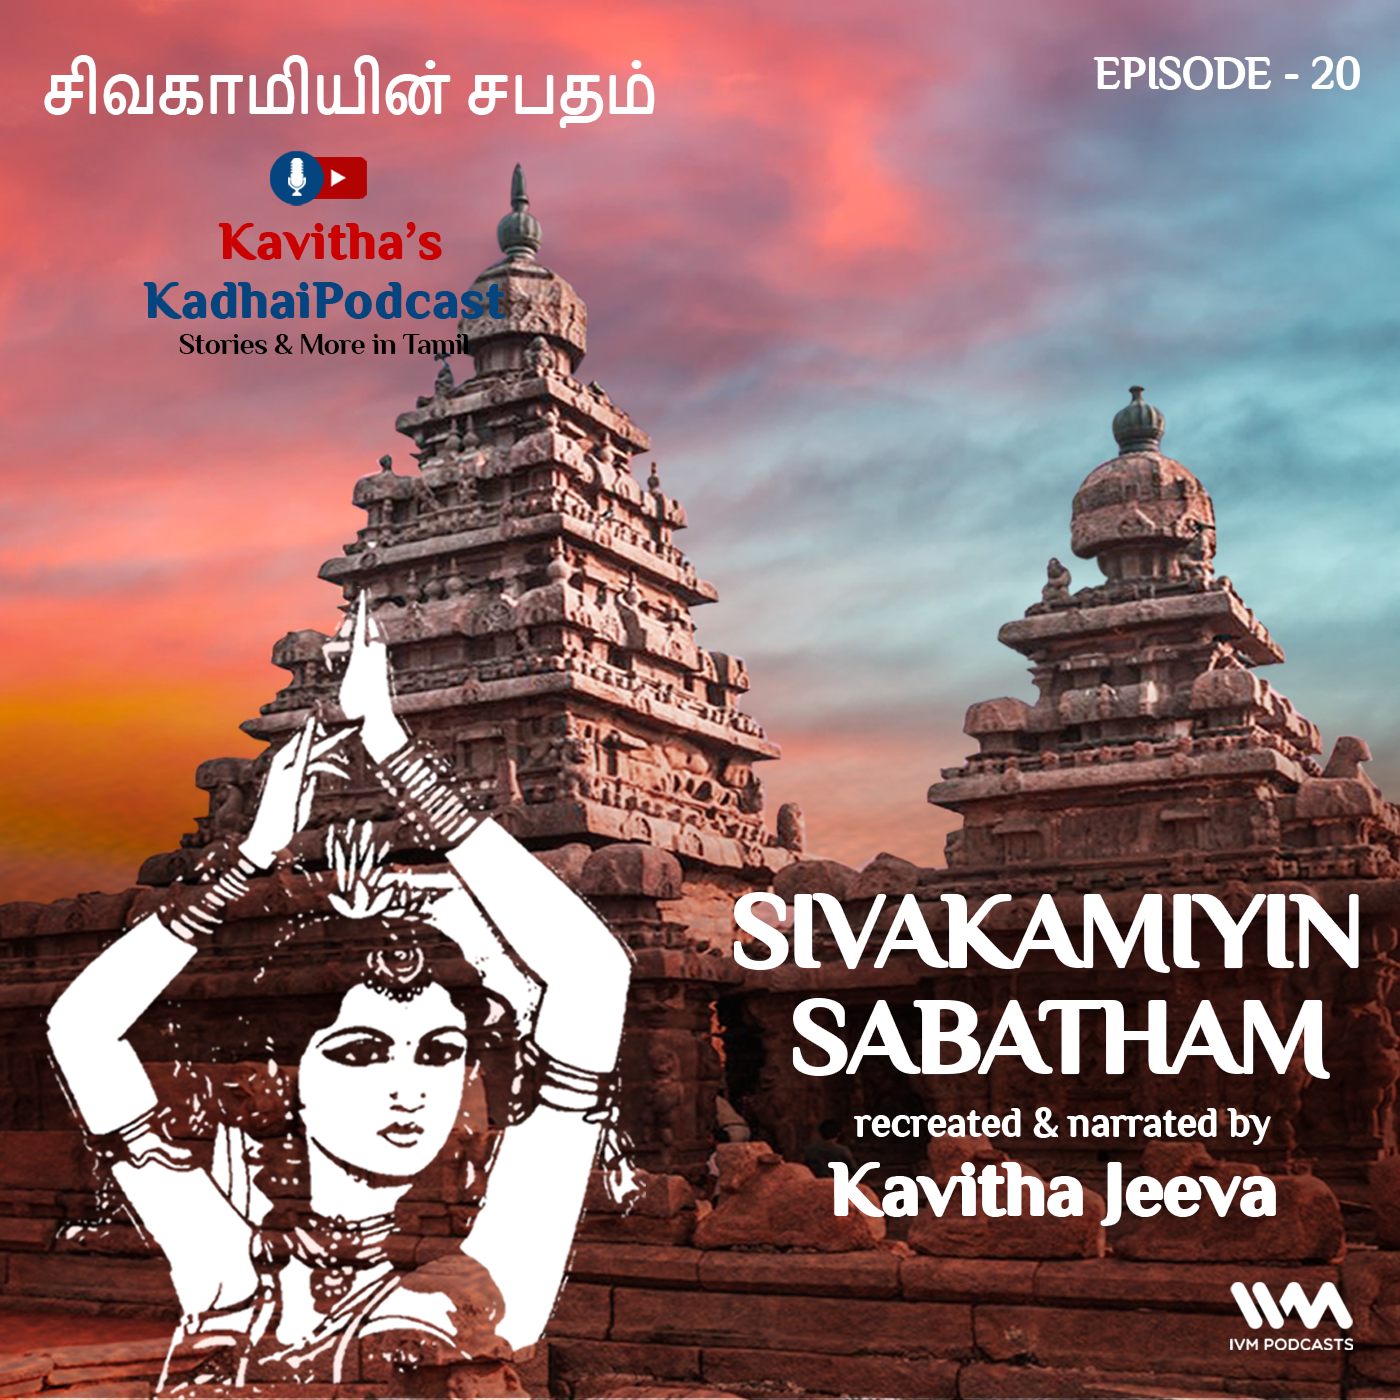 KadhaiPodcast’s Sivakamiyin Sabatham - Episode #20